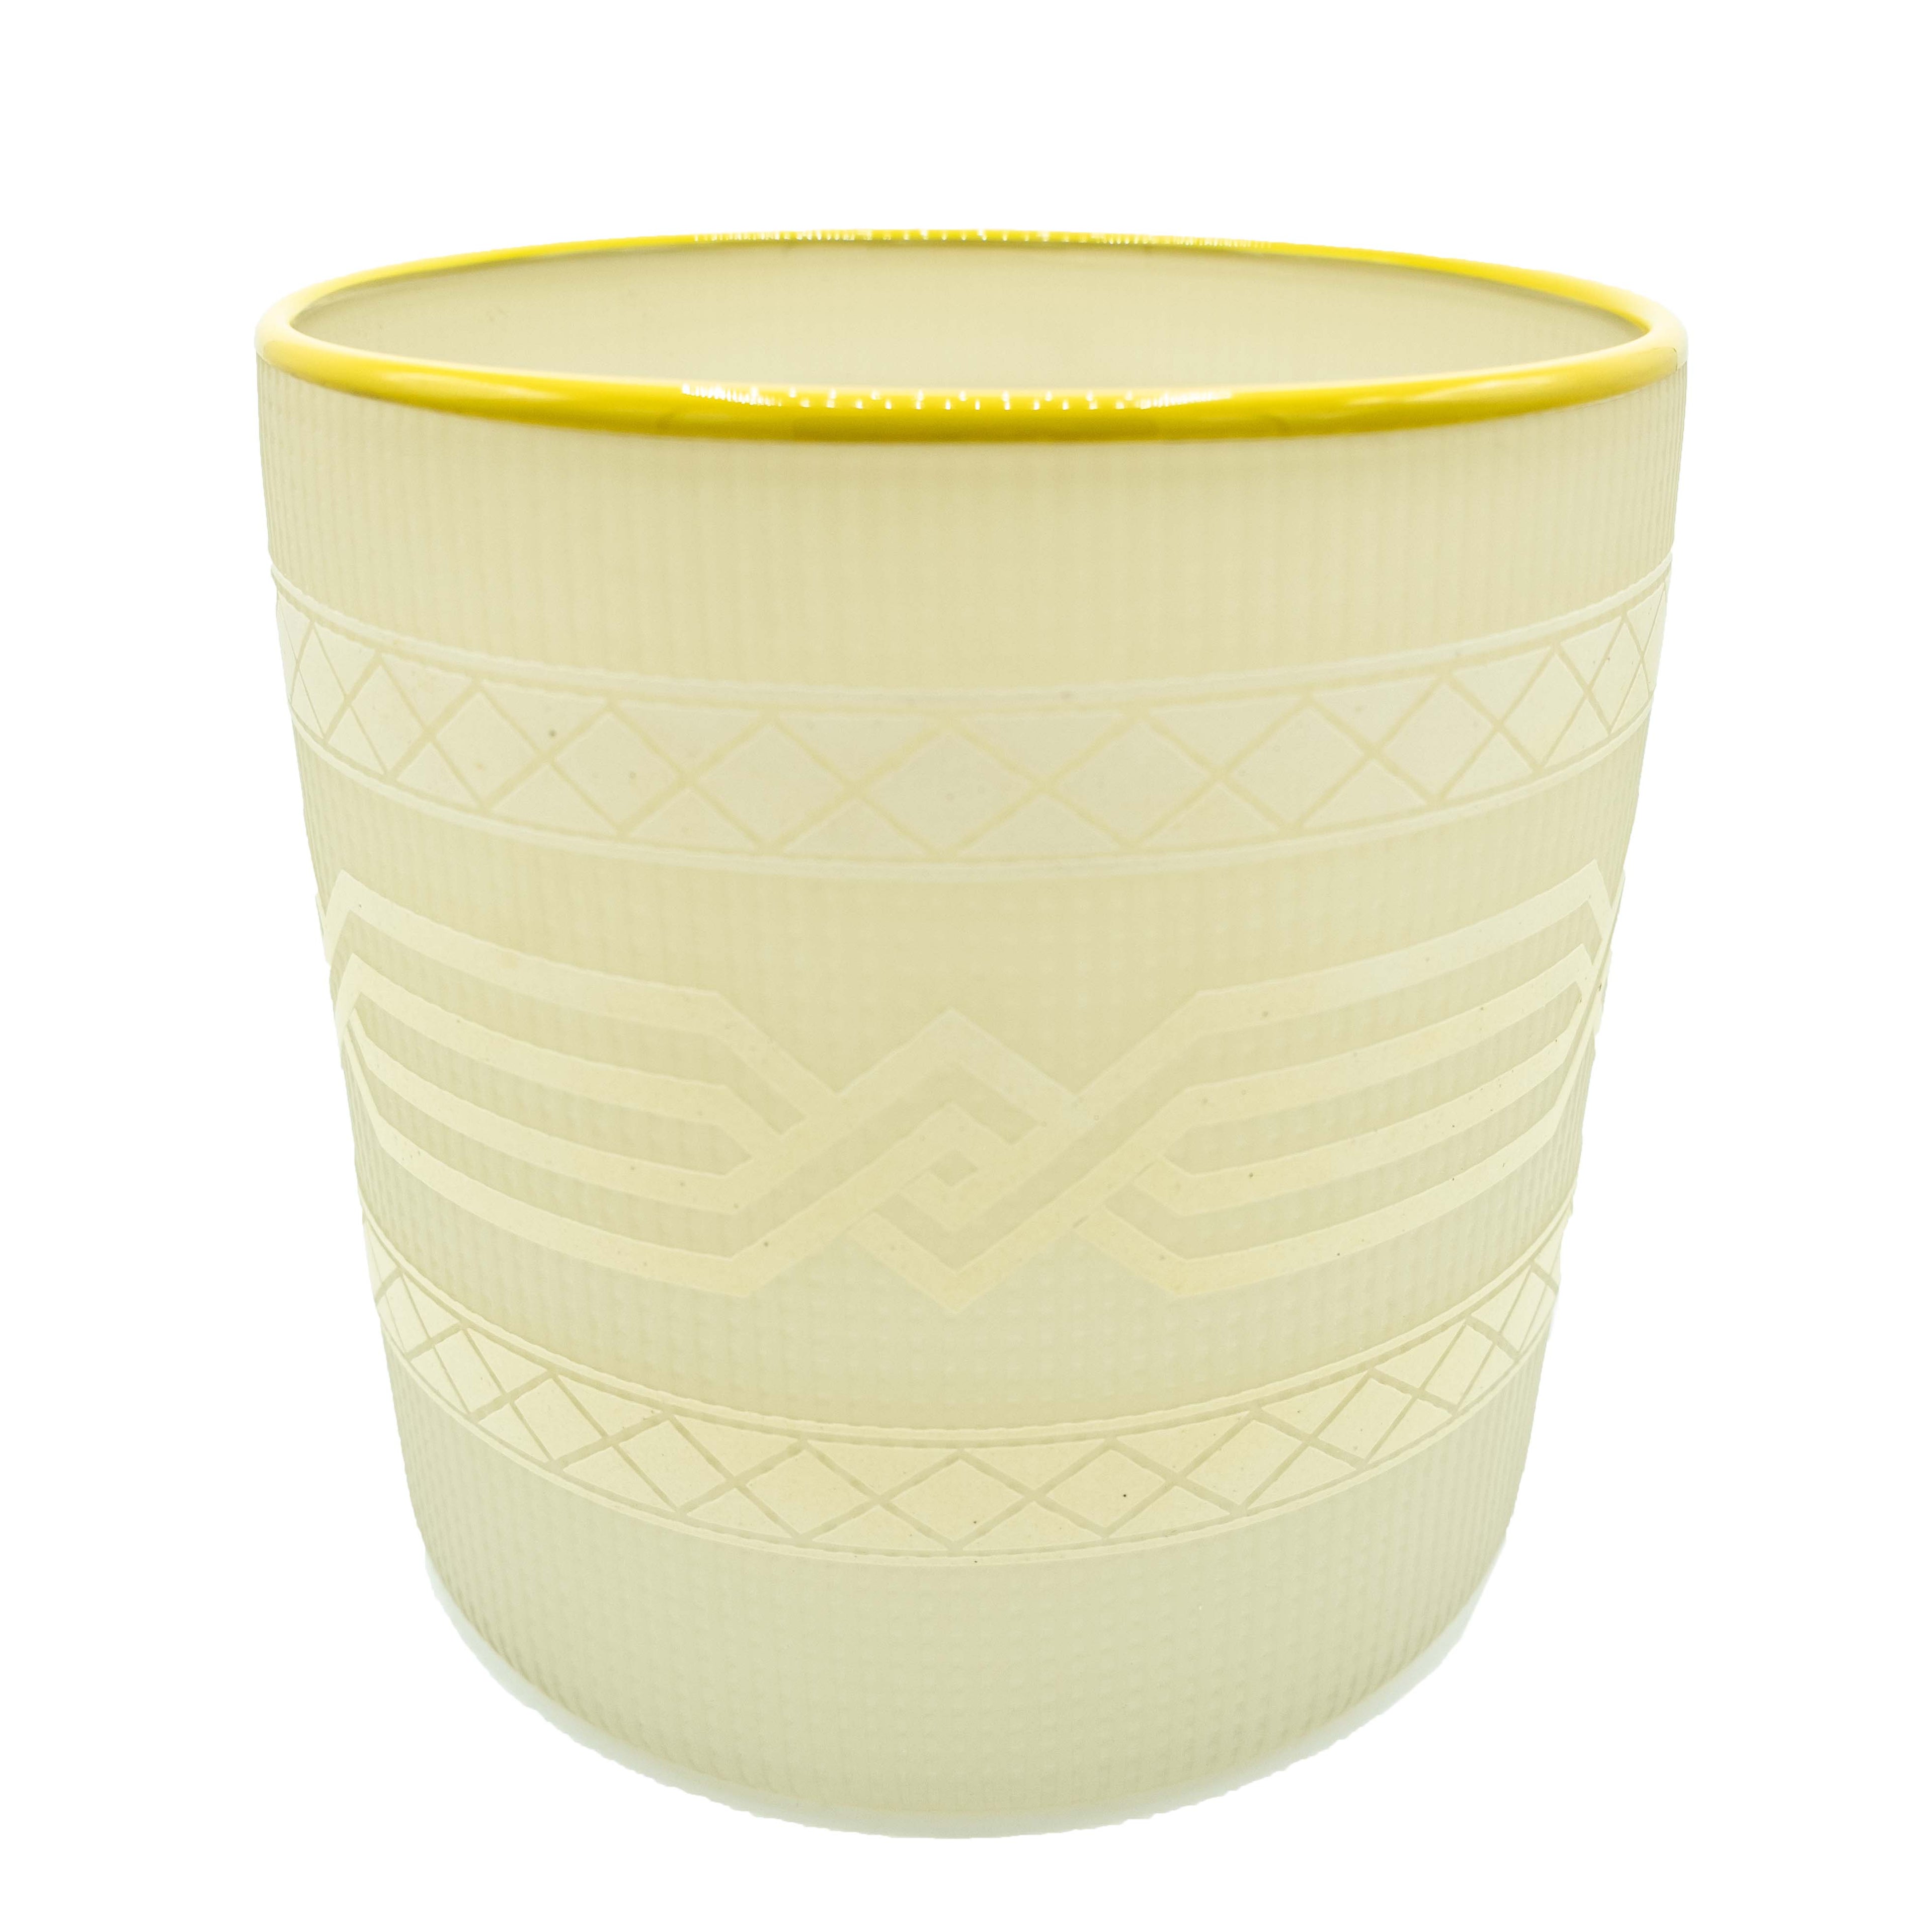 Tlingit Shelf Basket: #B12-08: Cream/Yellow